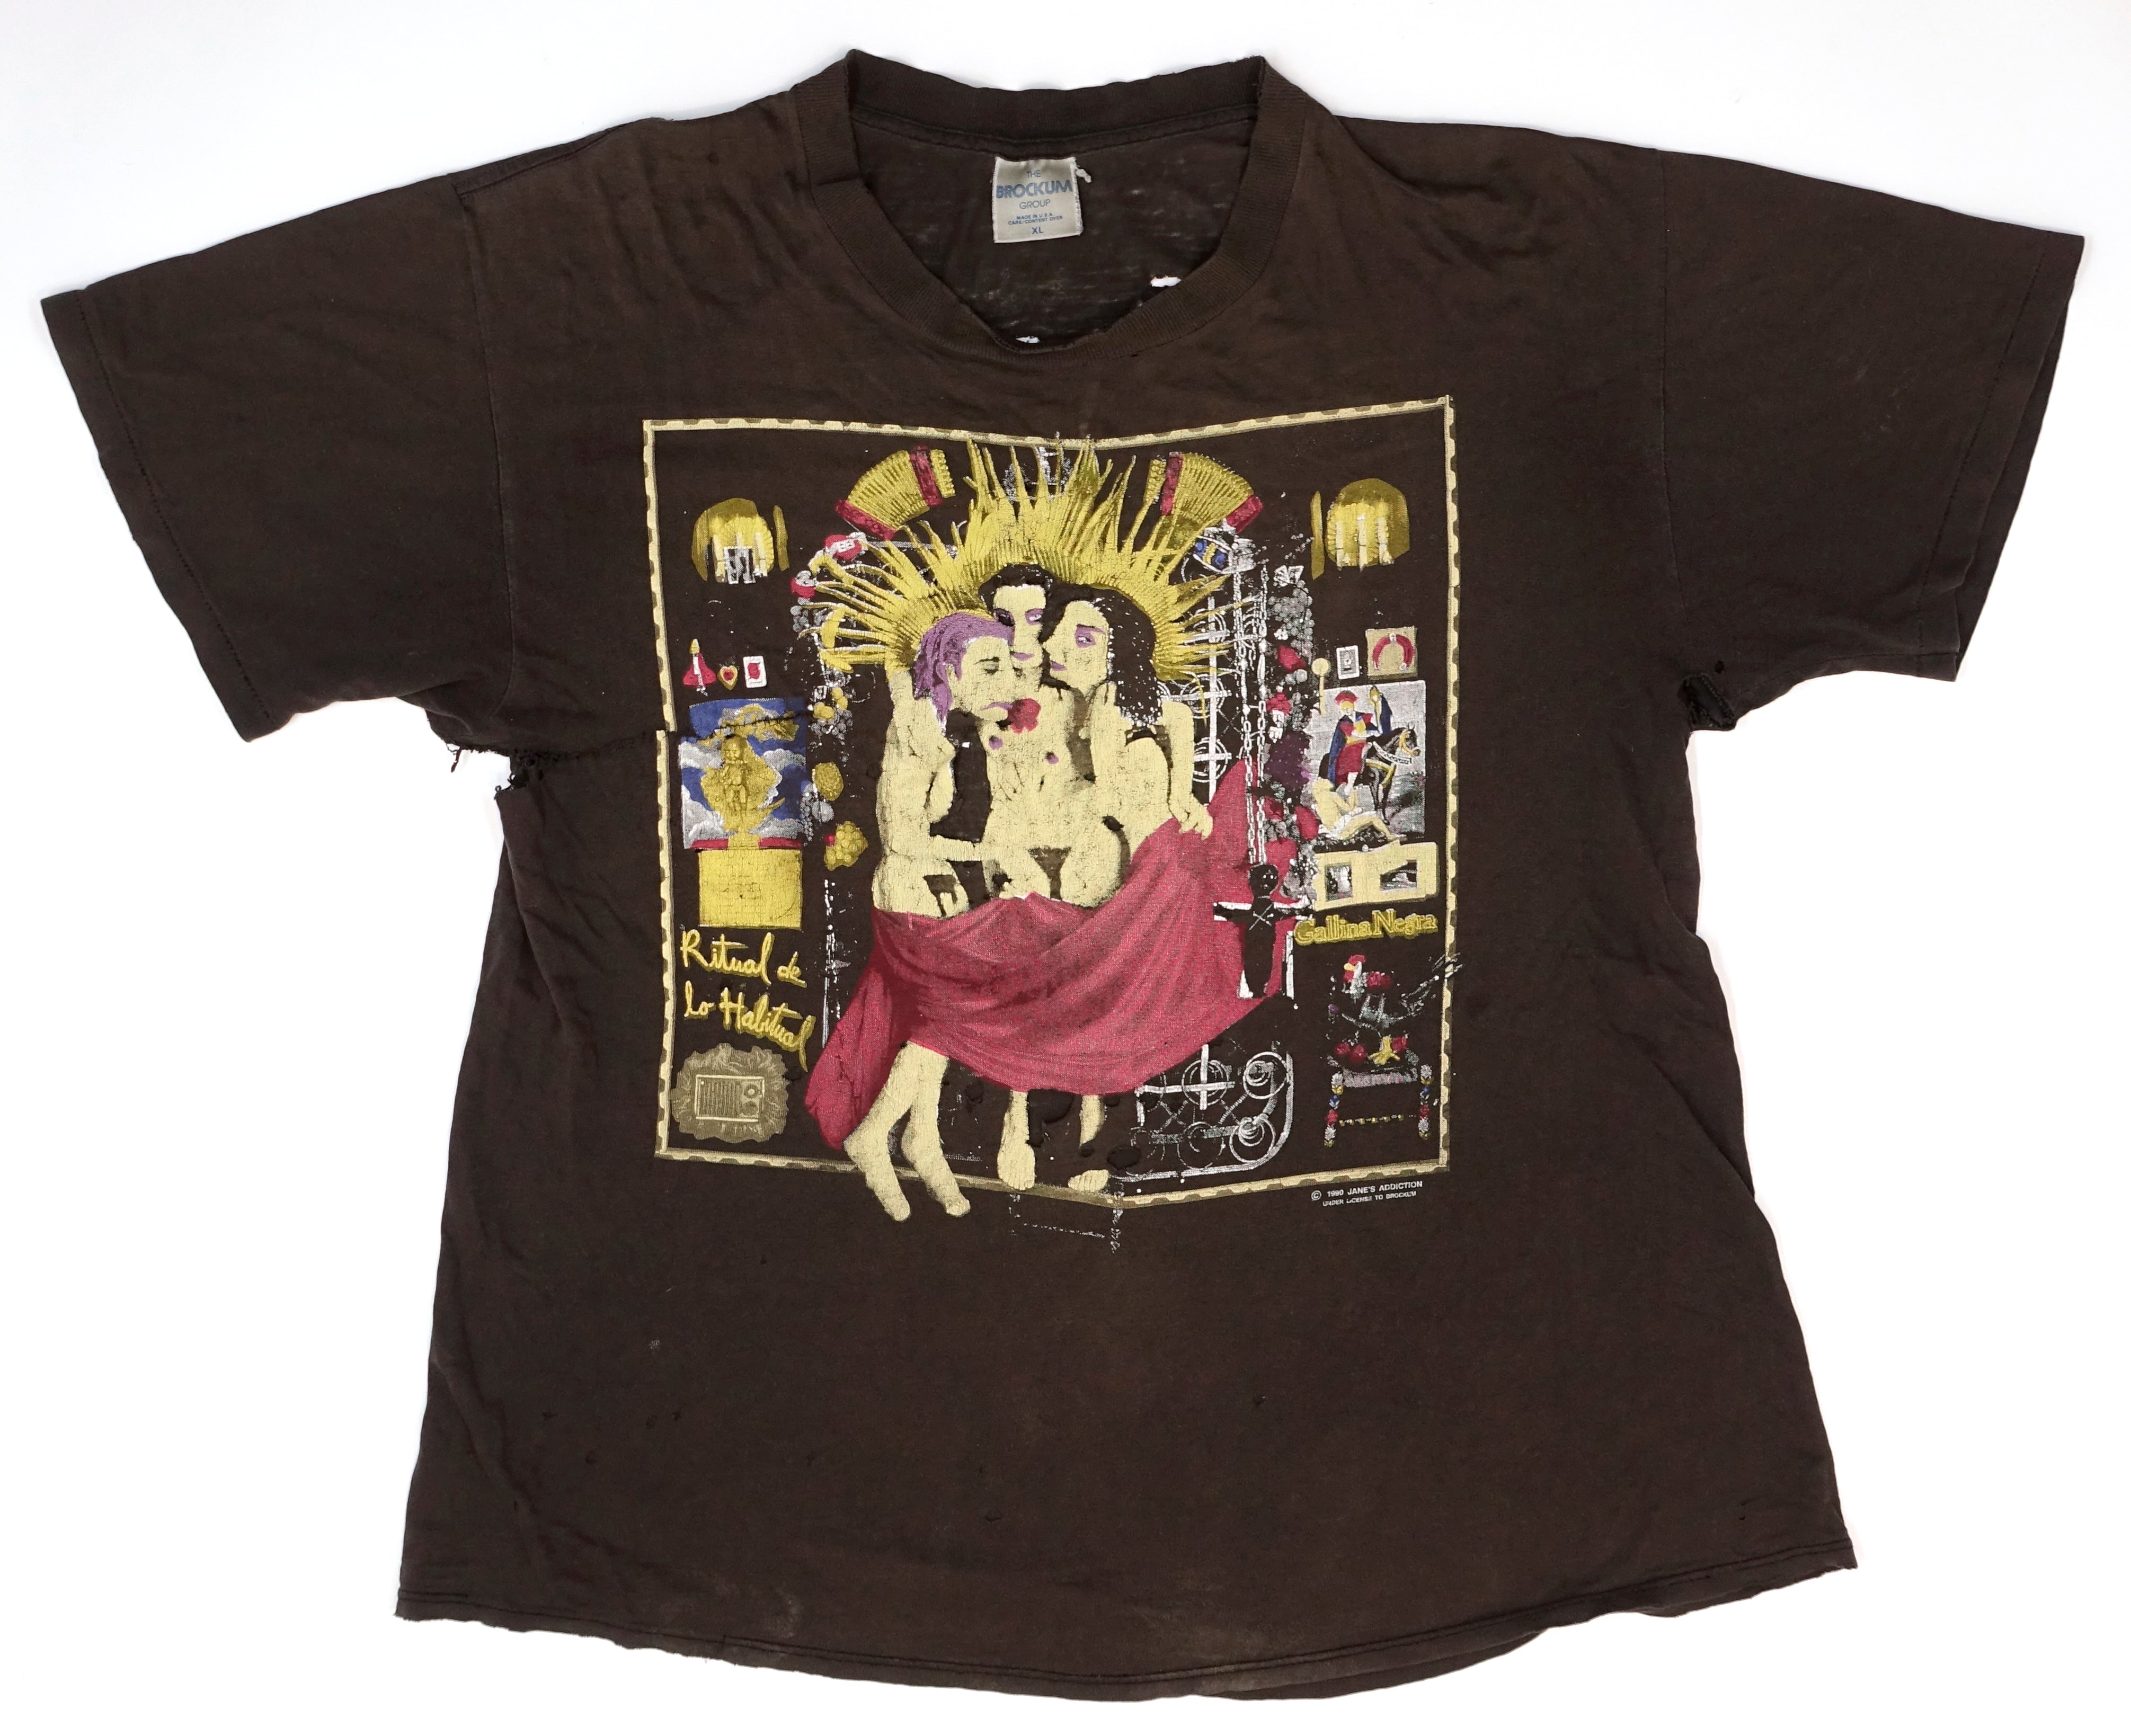 Jane's Addiction - Ritual De Lo Habitual 1990 Tour Shirt Size XL